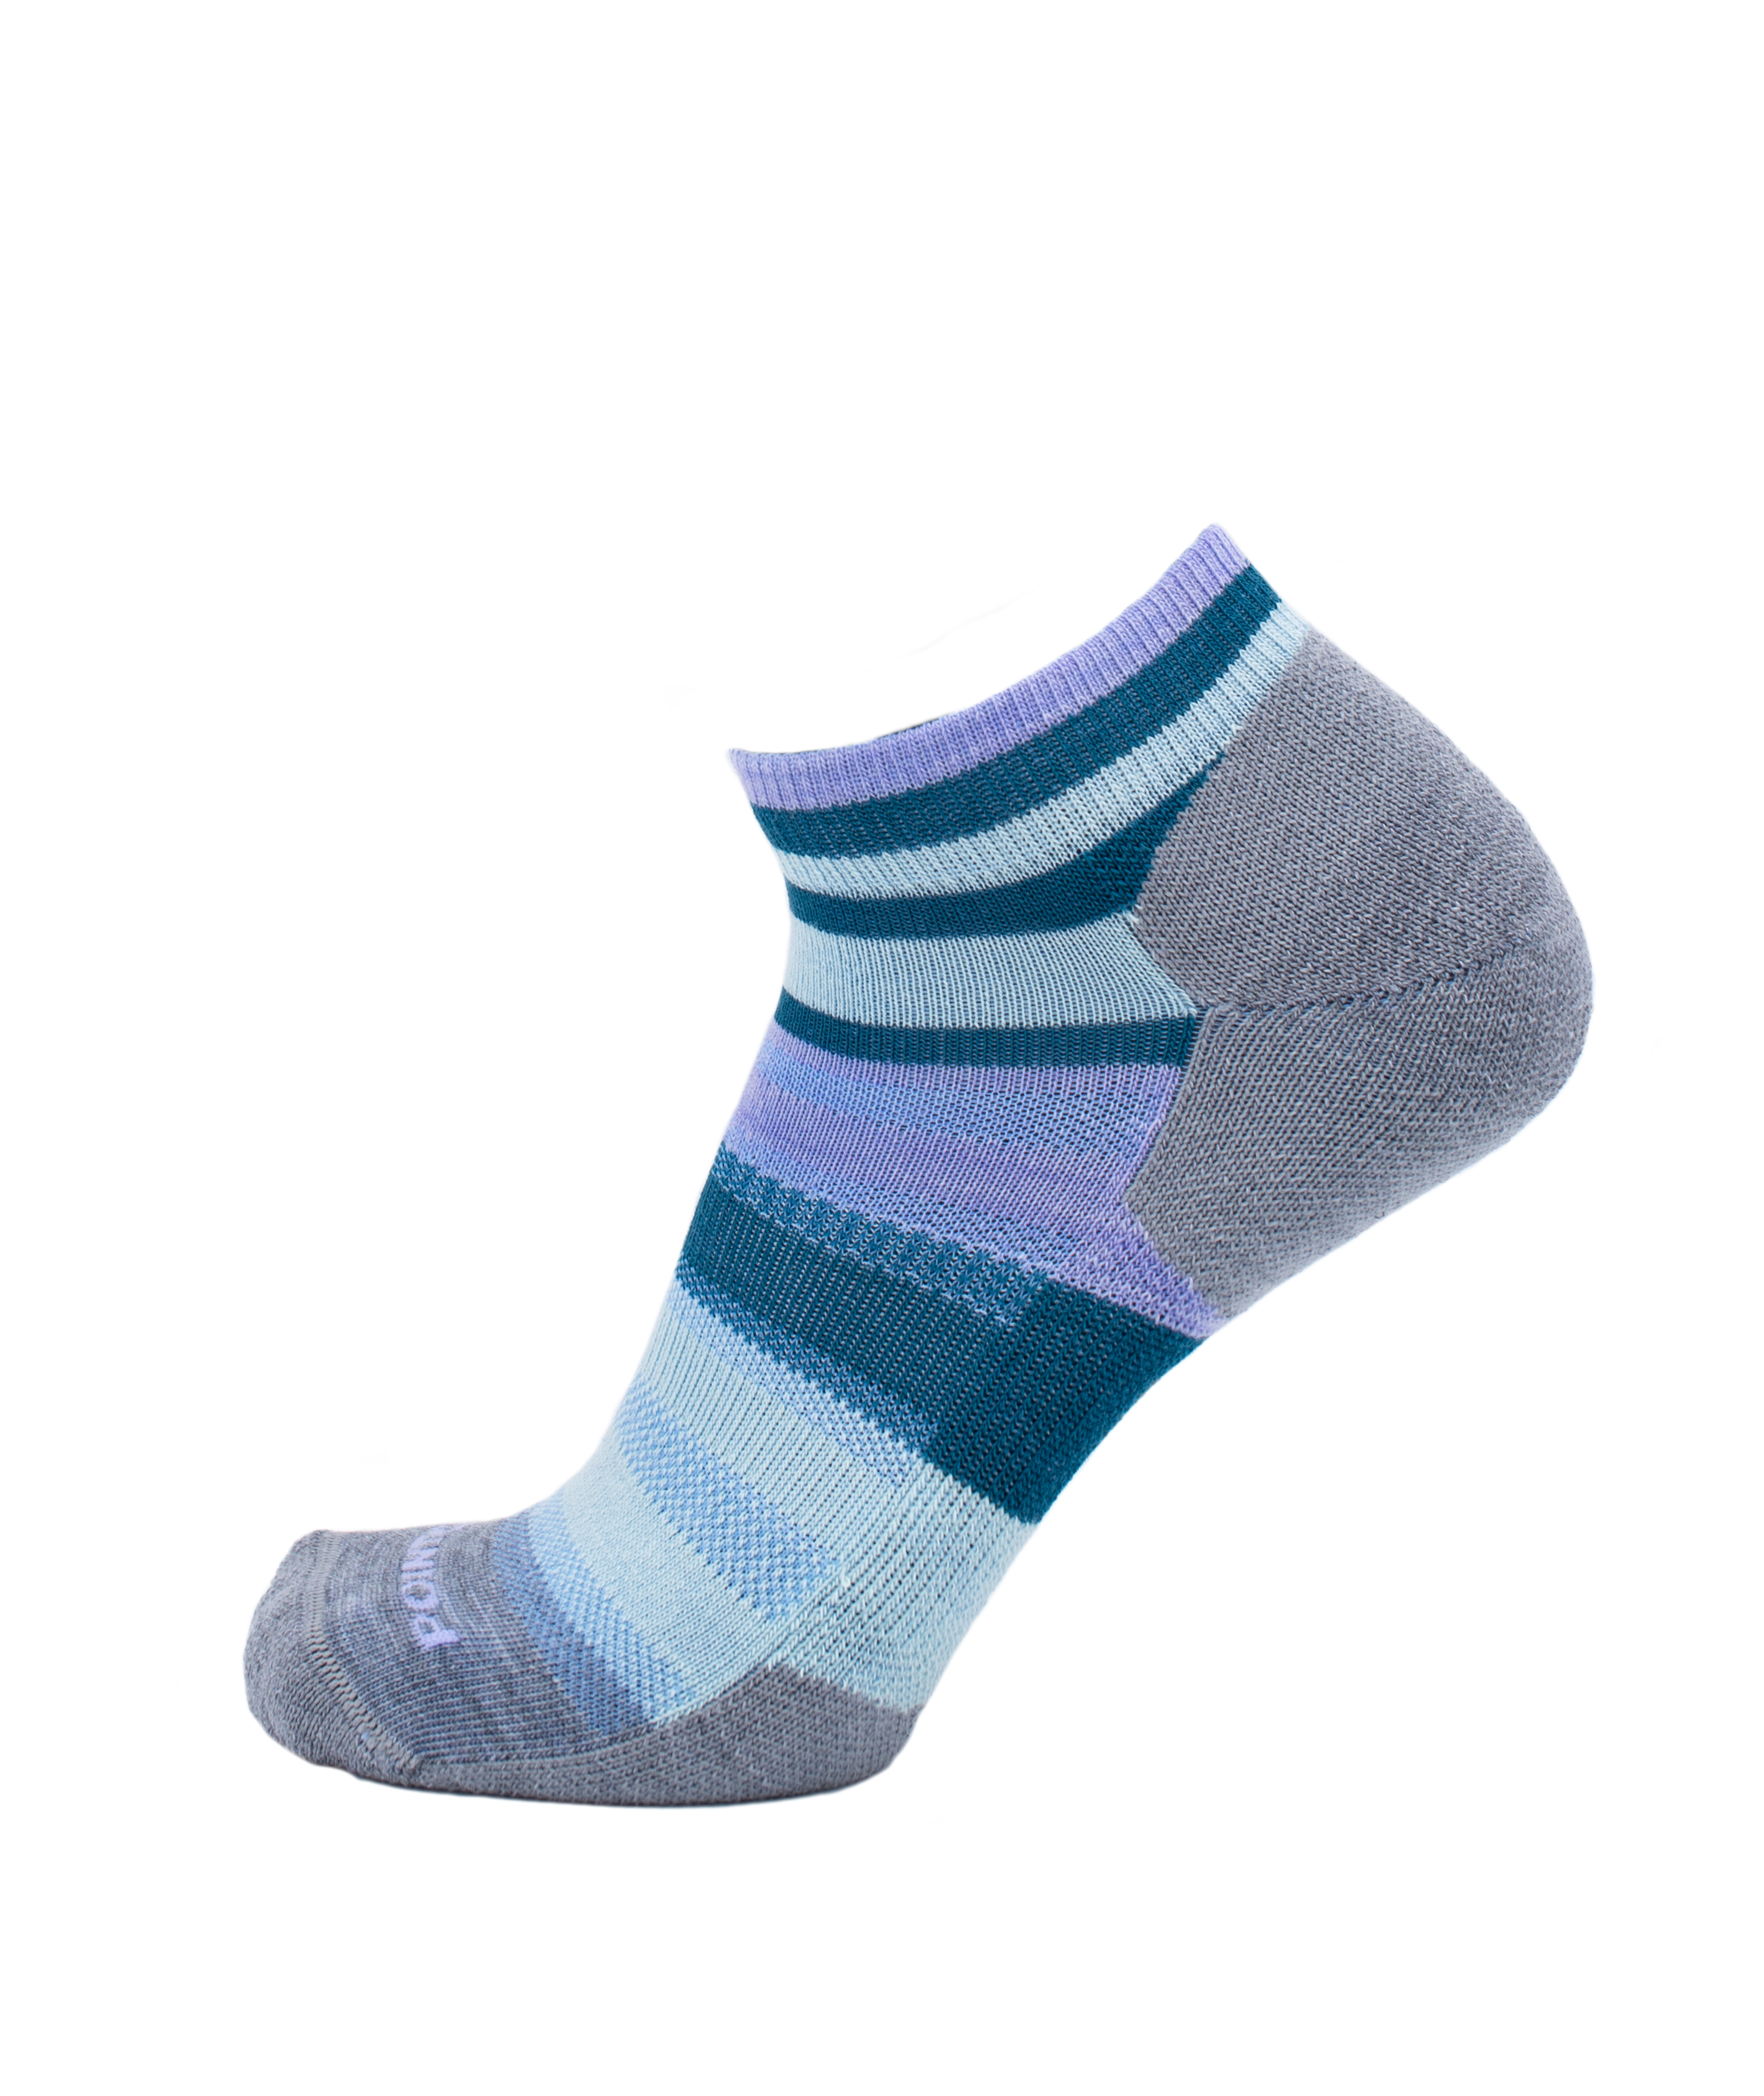 Men's Superior Merino Wool Socks - Point6